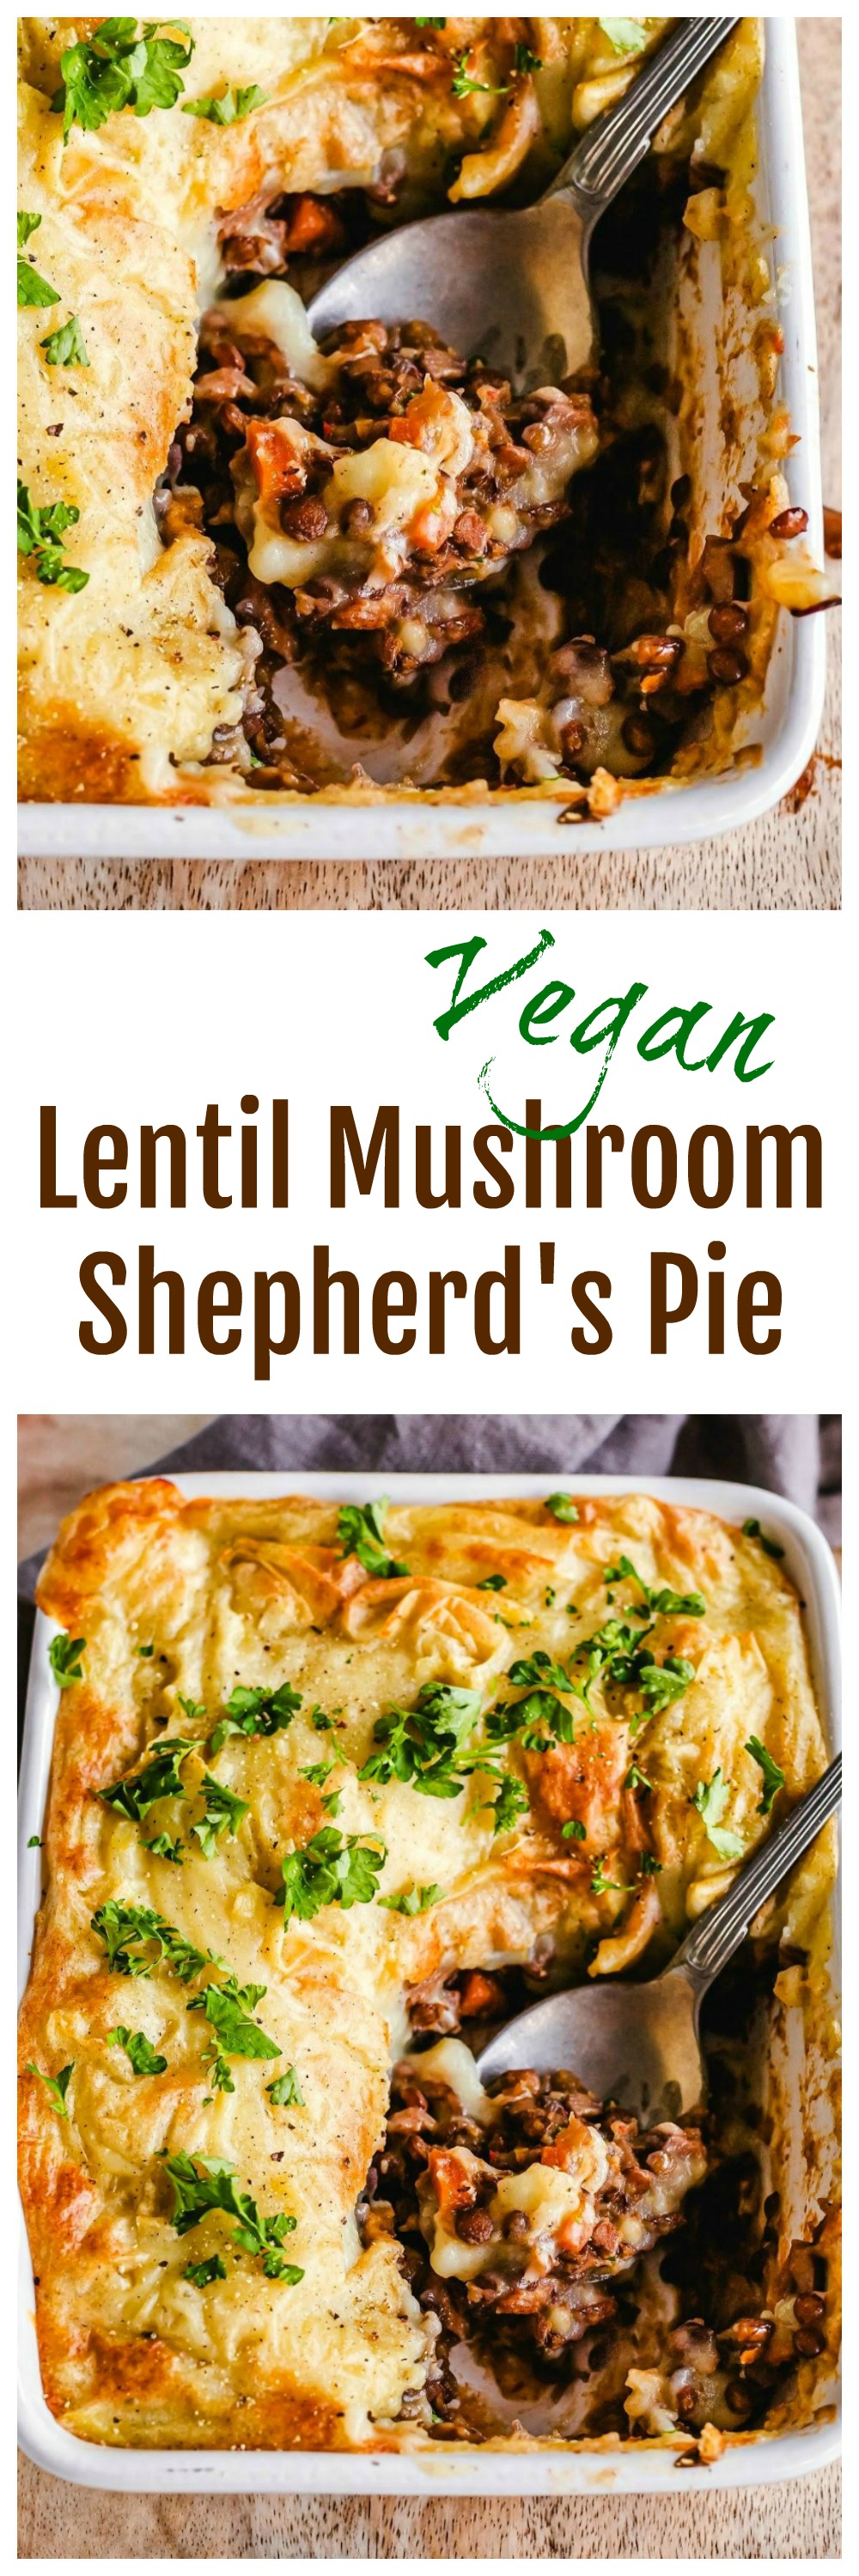 Collage of Lentil Mushroom Shepherd's Pie with recipe title between 2 photos